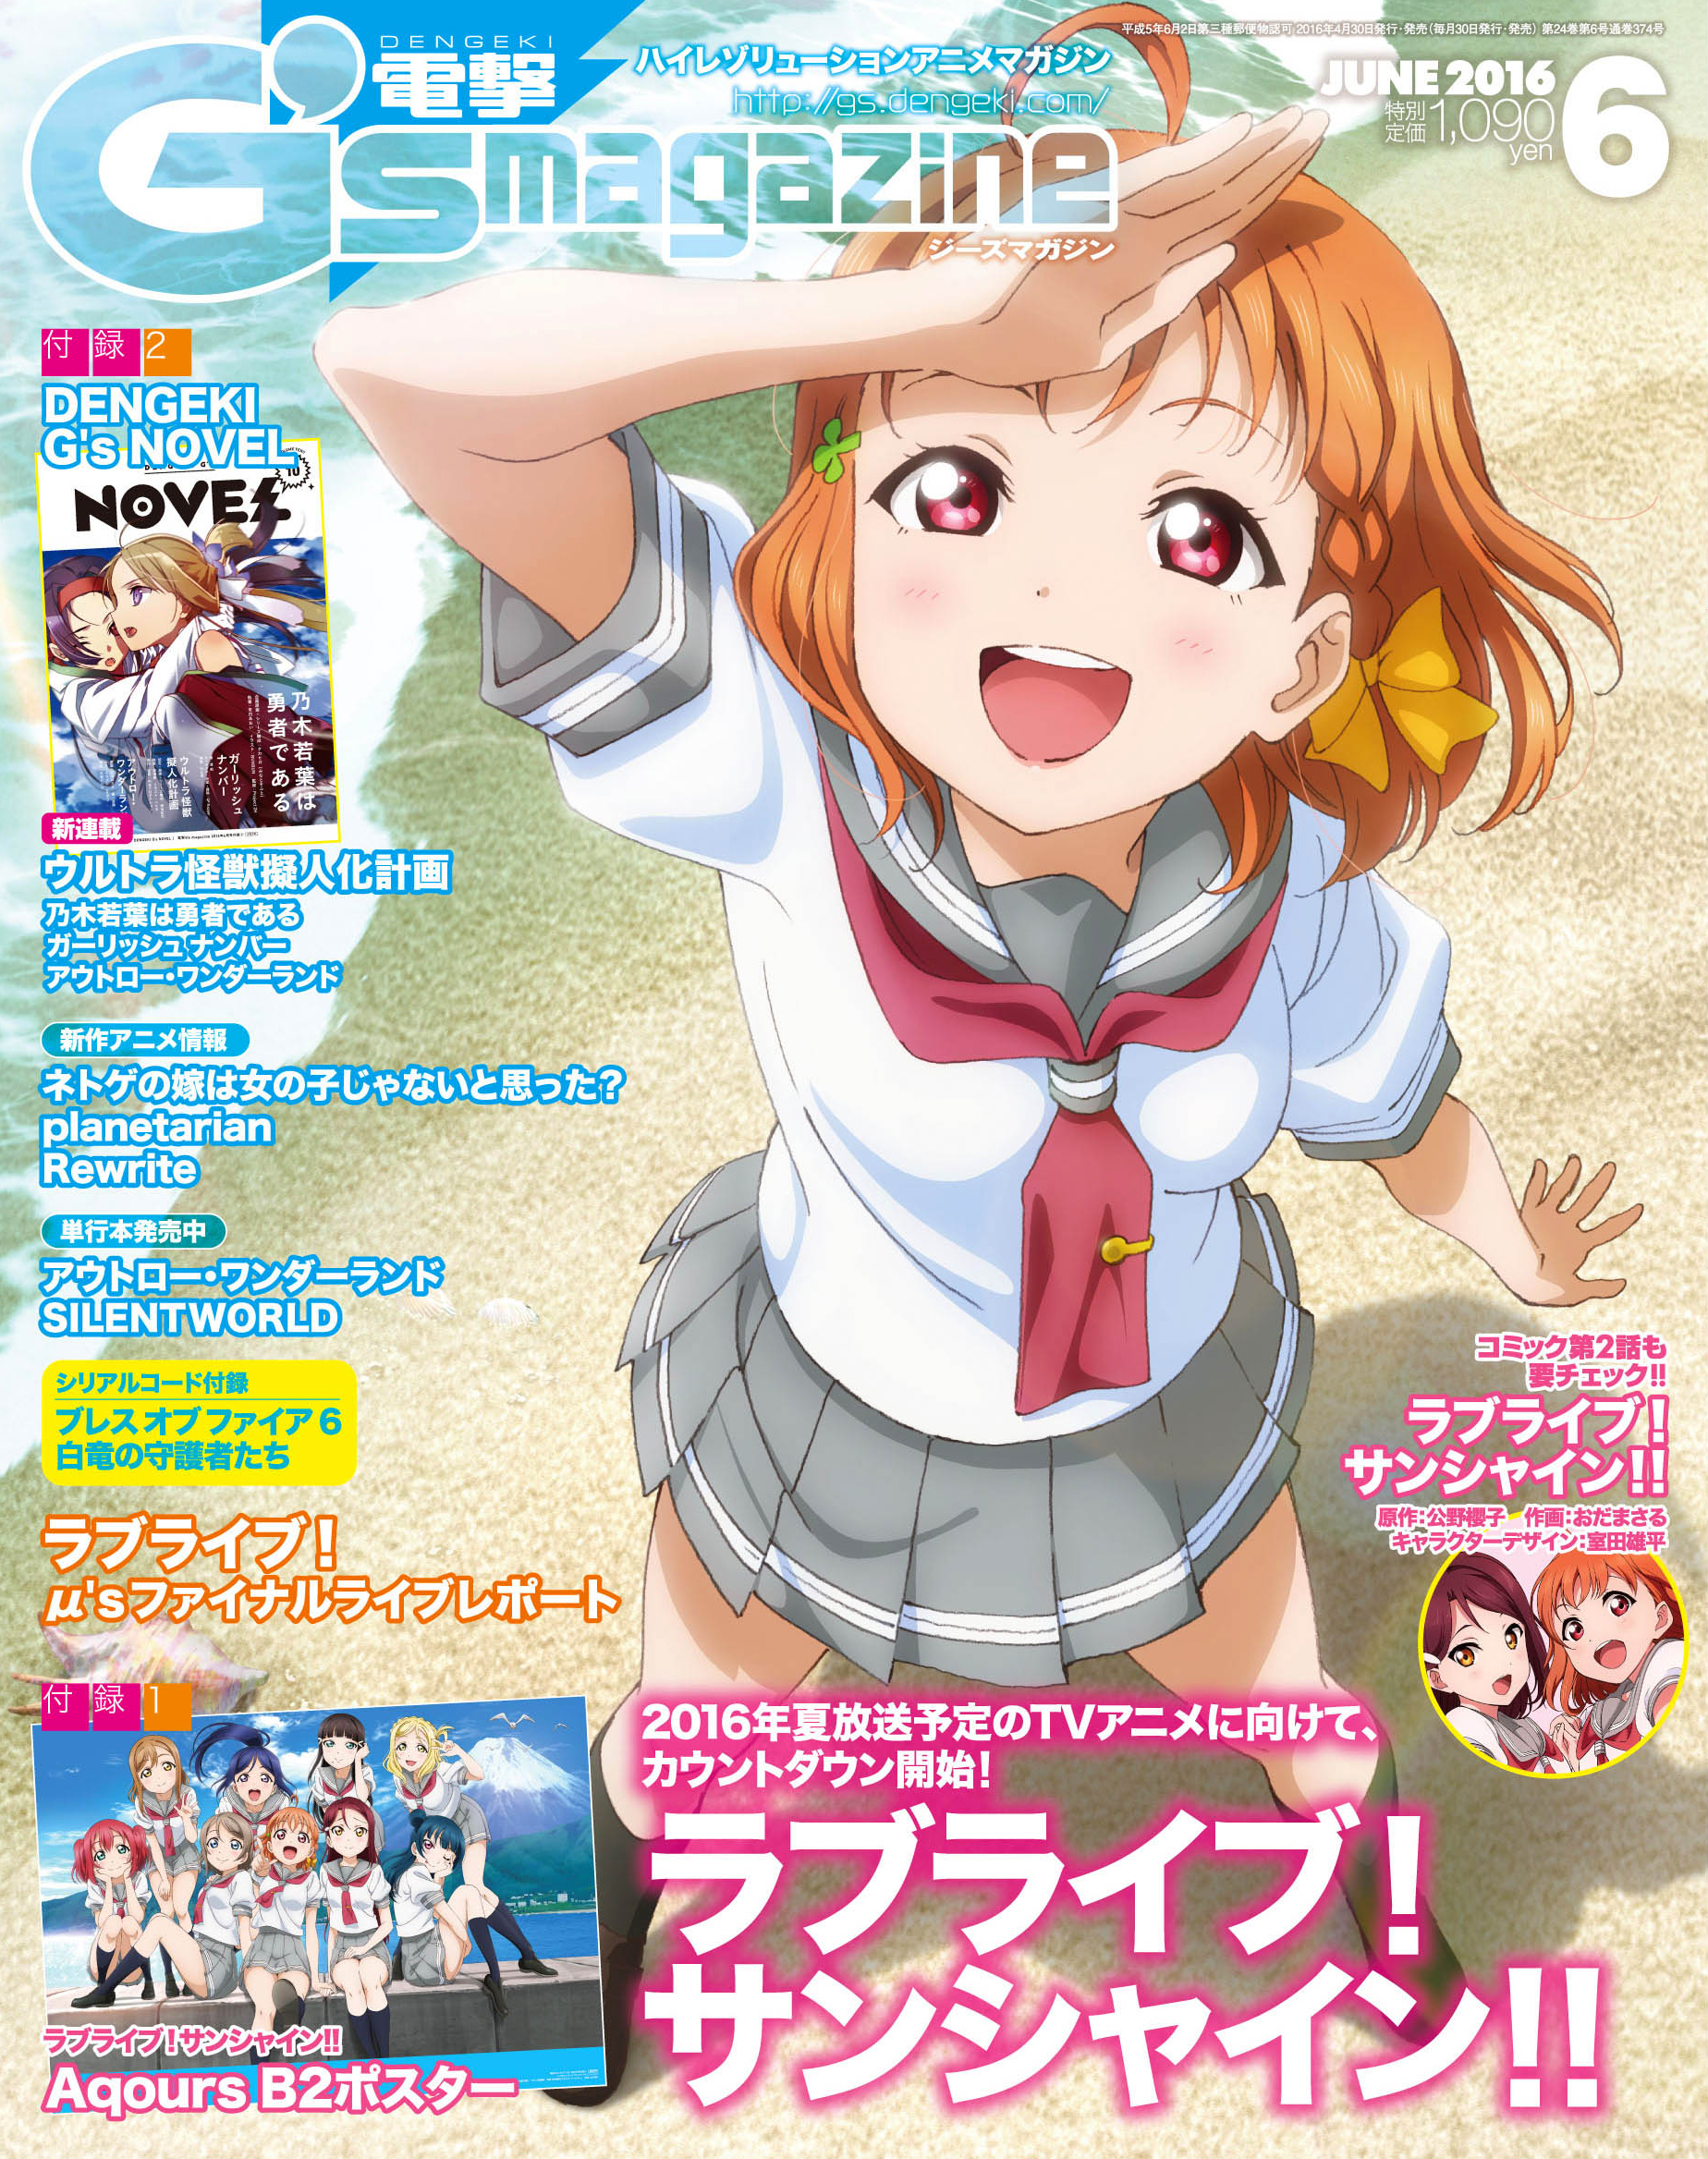 Dengeki G’s Magazine juni 2016 scans